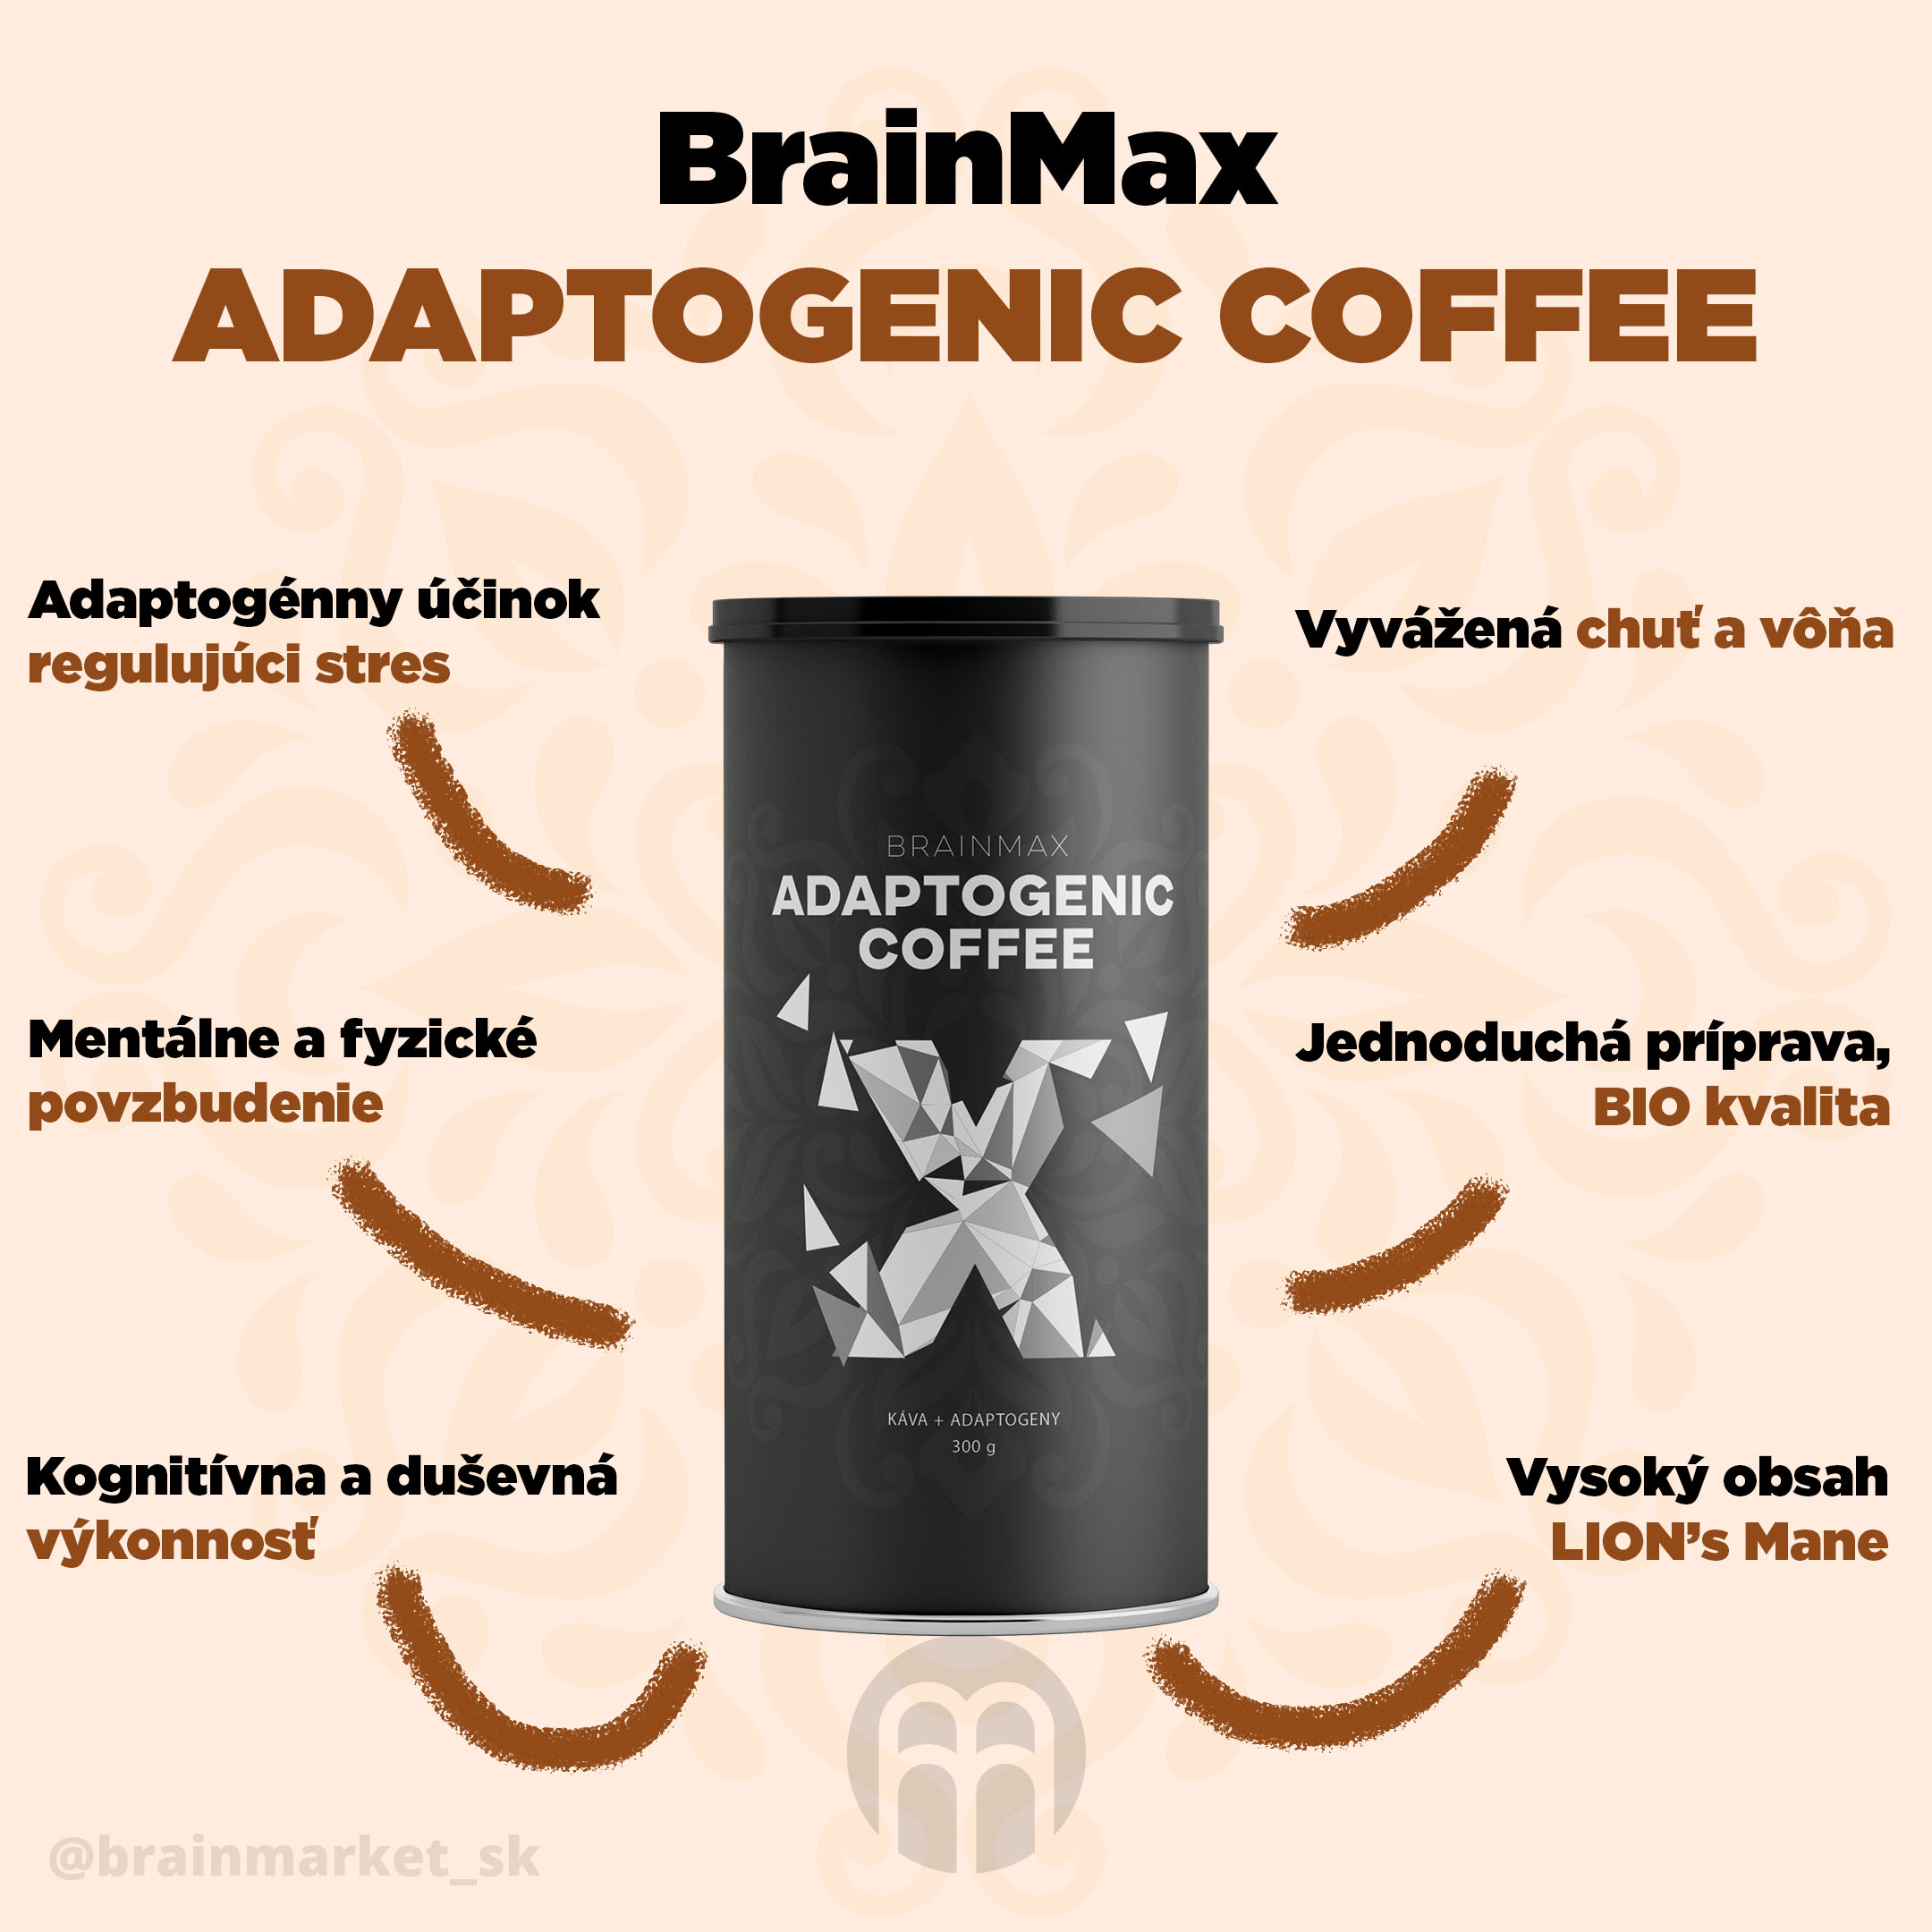 Adaptogenic Coffee BrainMax infografika brainmarket SK